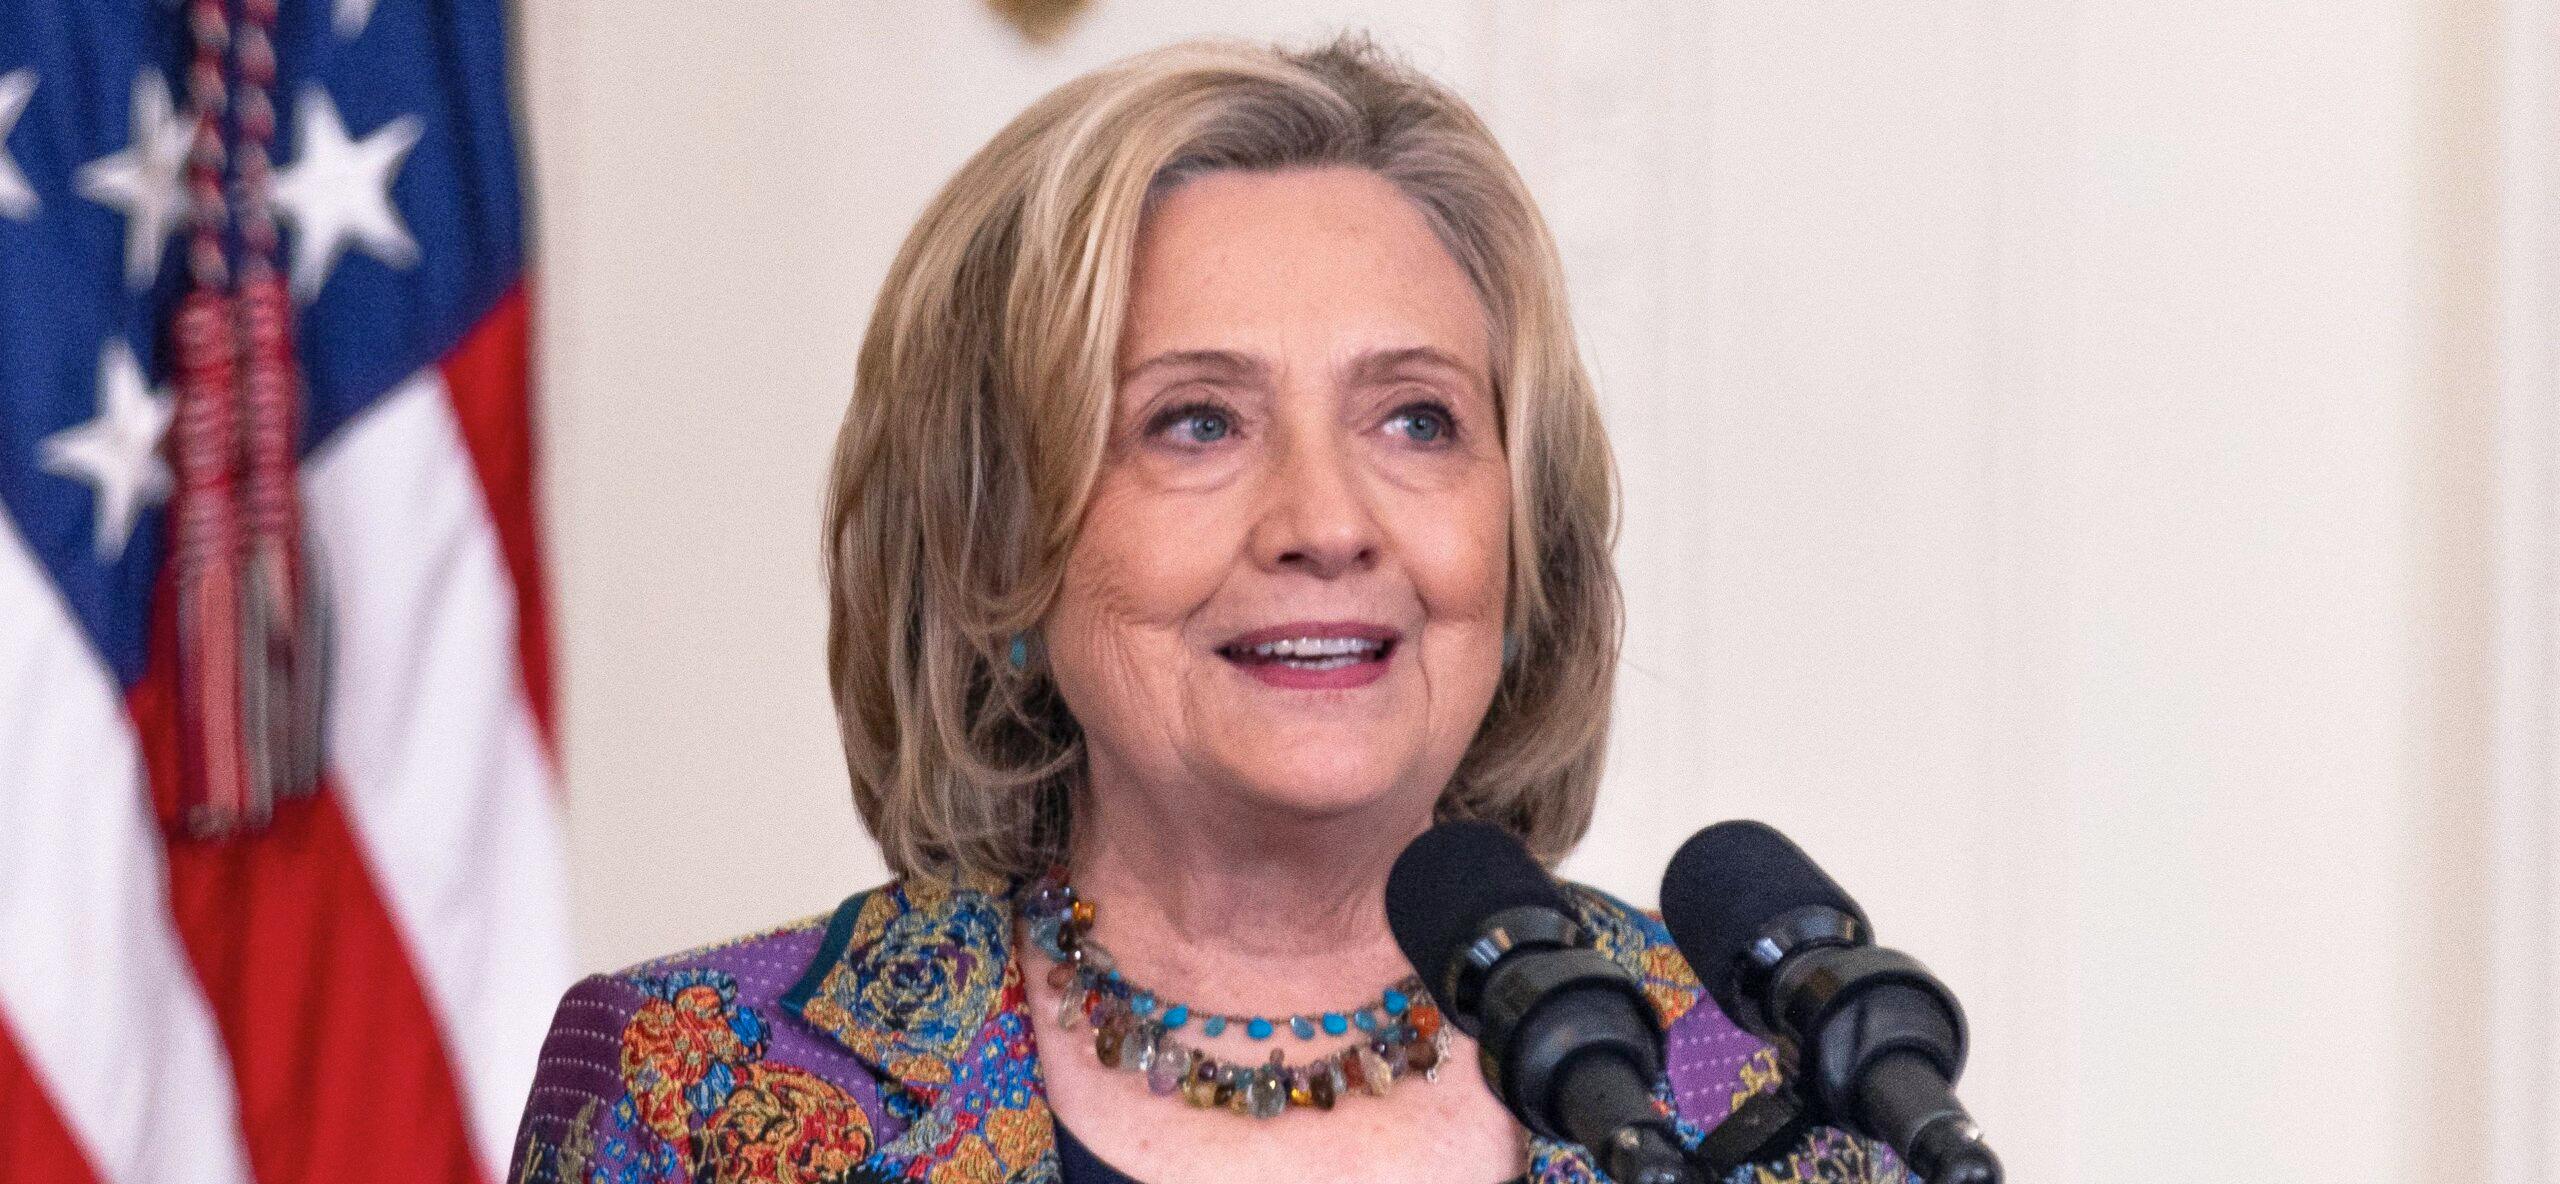 Hillary Clinton Slammed For Linking Her 2016 Election Loss To ‘Barbie’ Oscars Snub